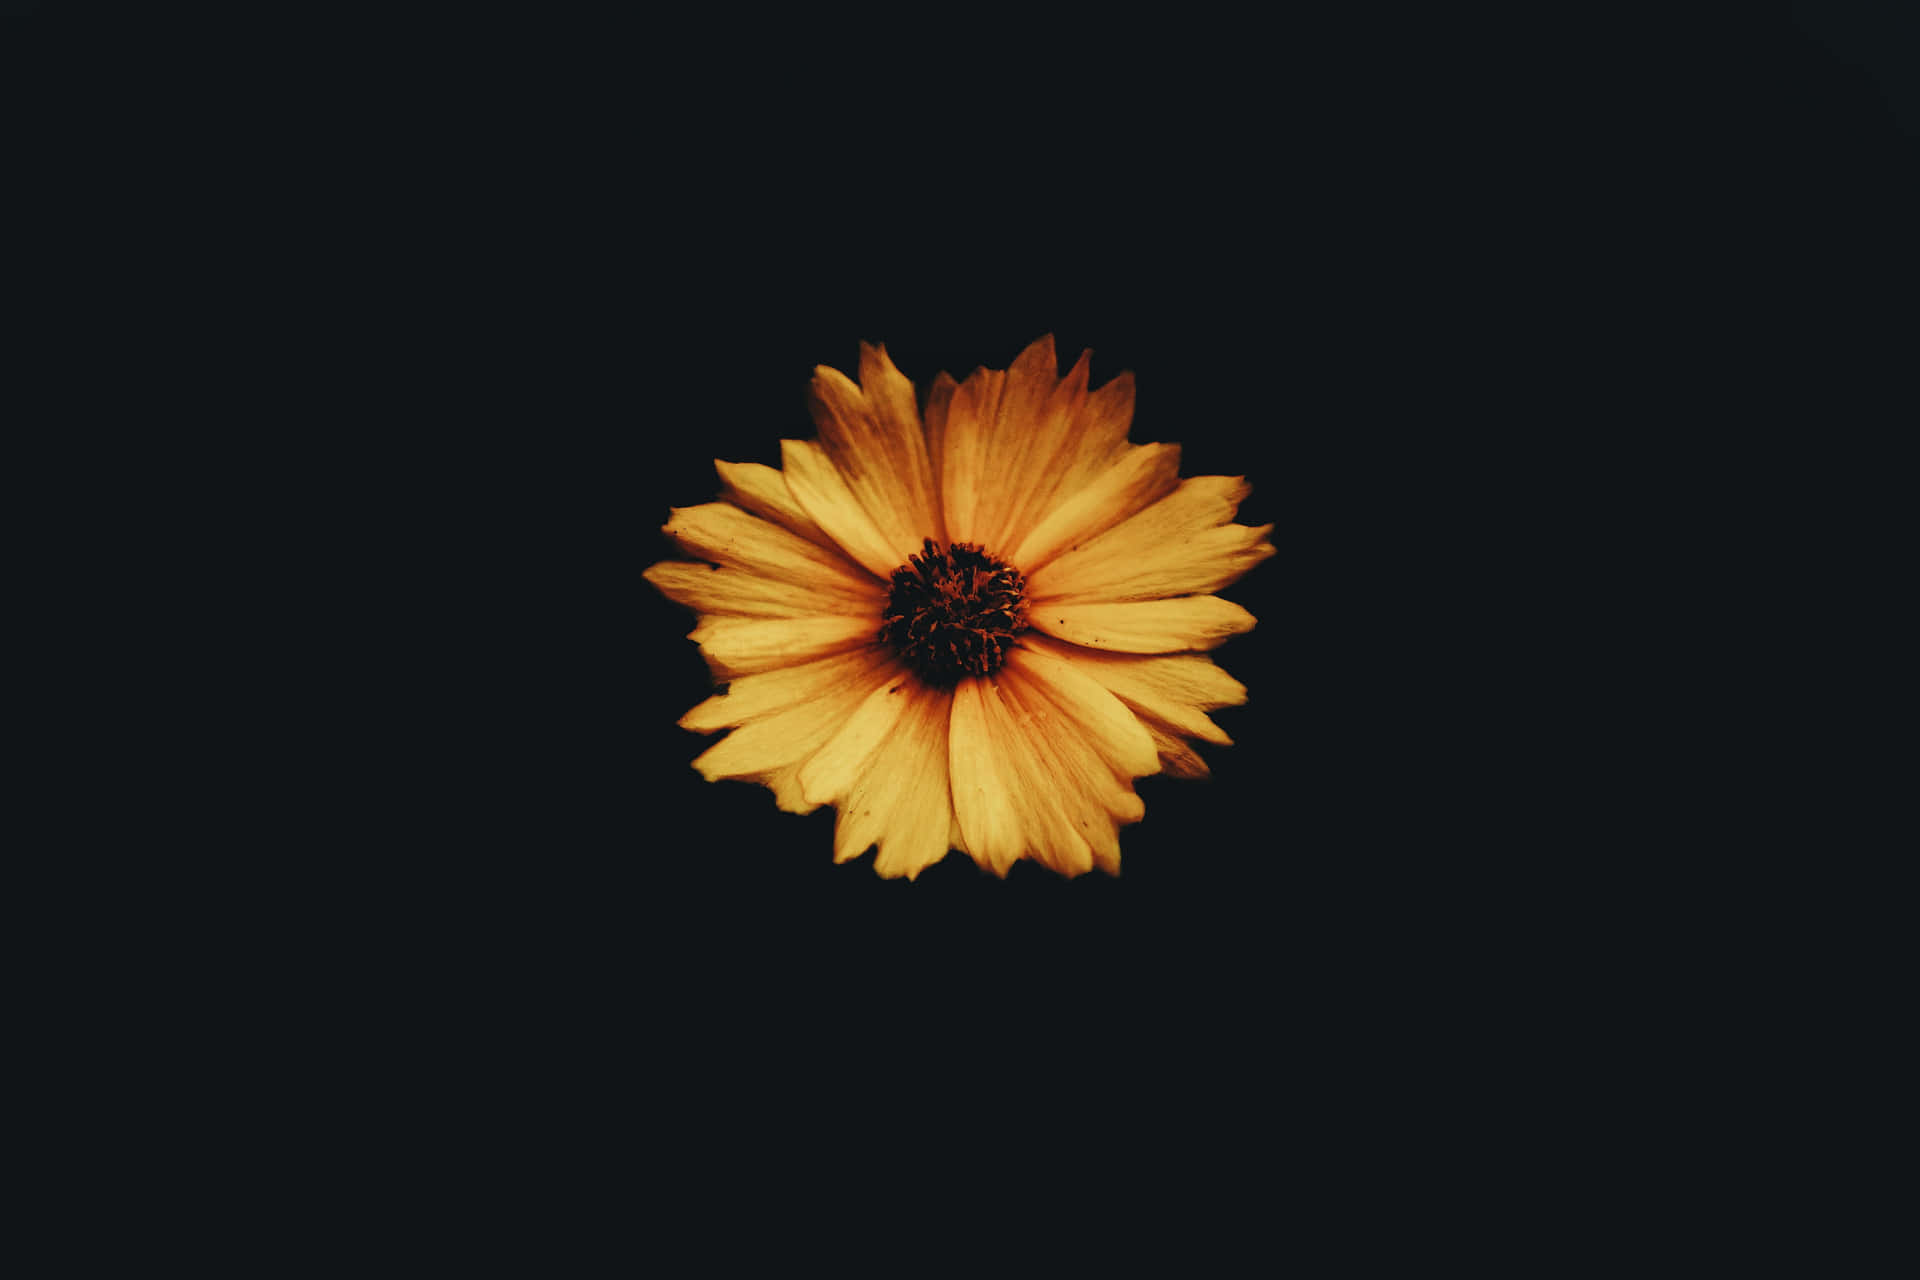 A stunning dark sunflower in all its glory. Wallpaper